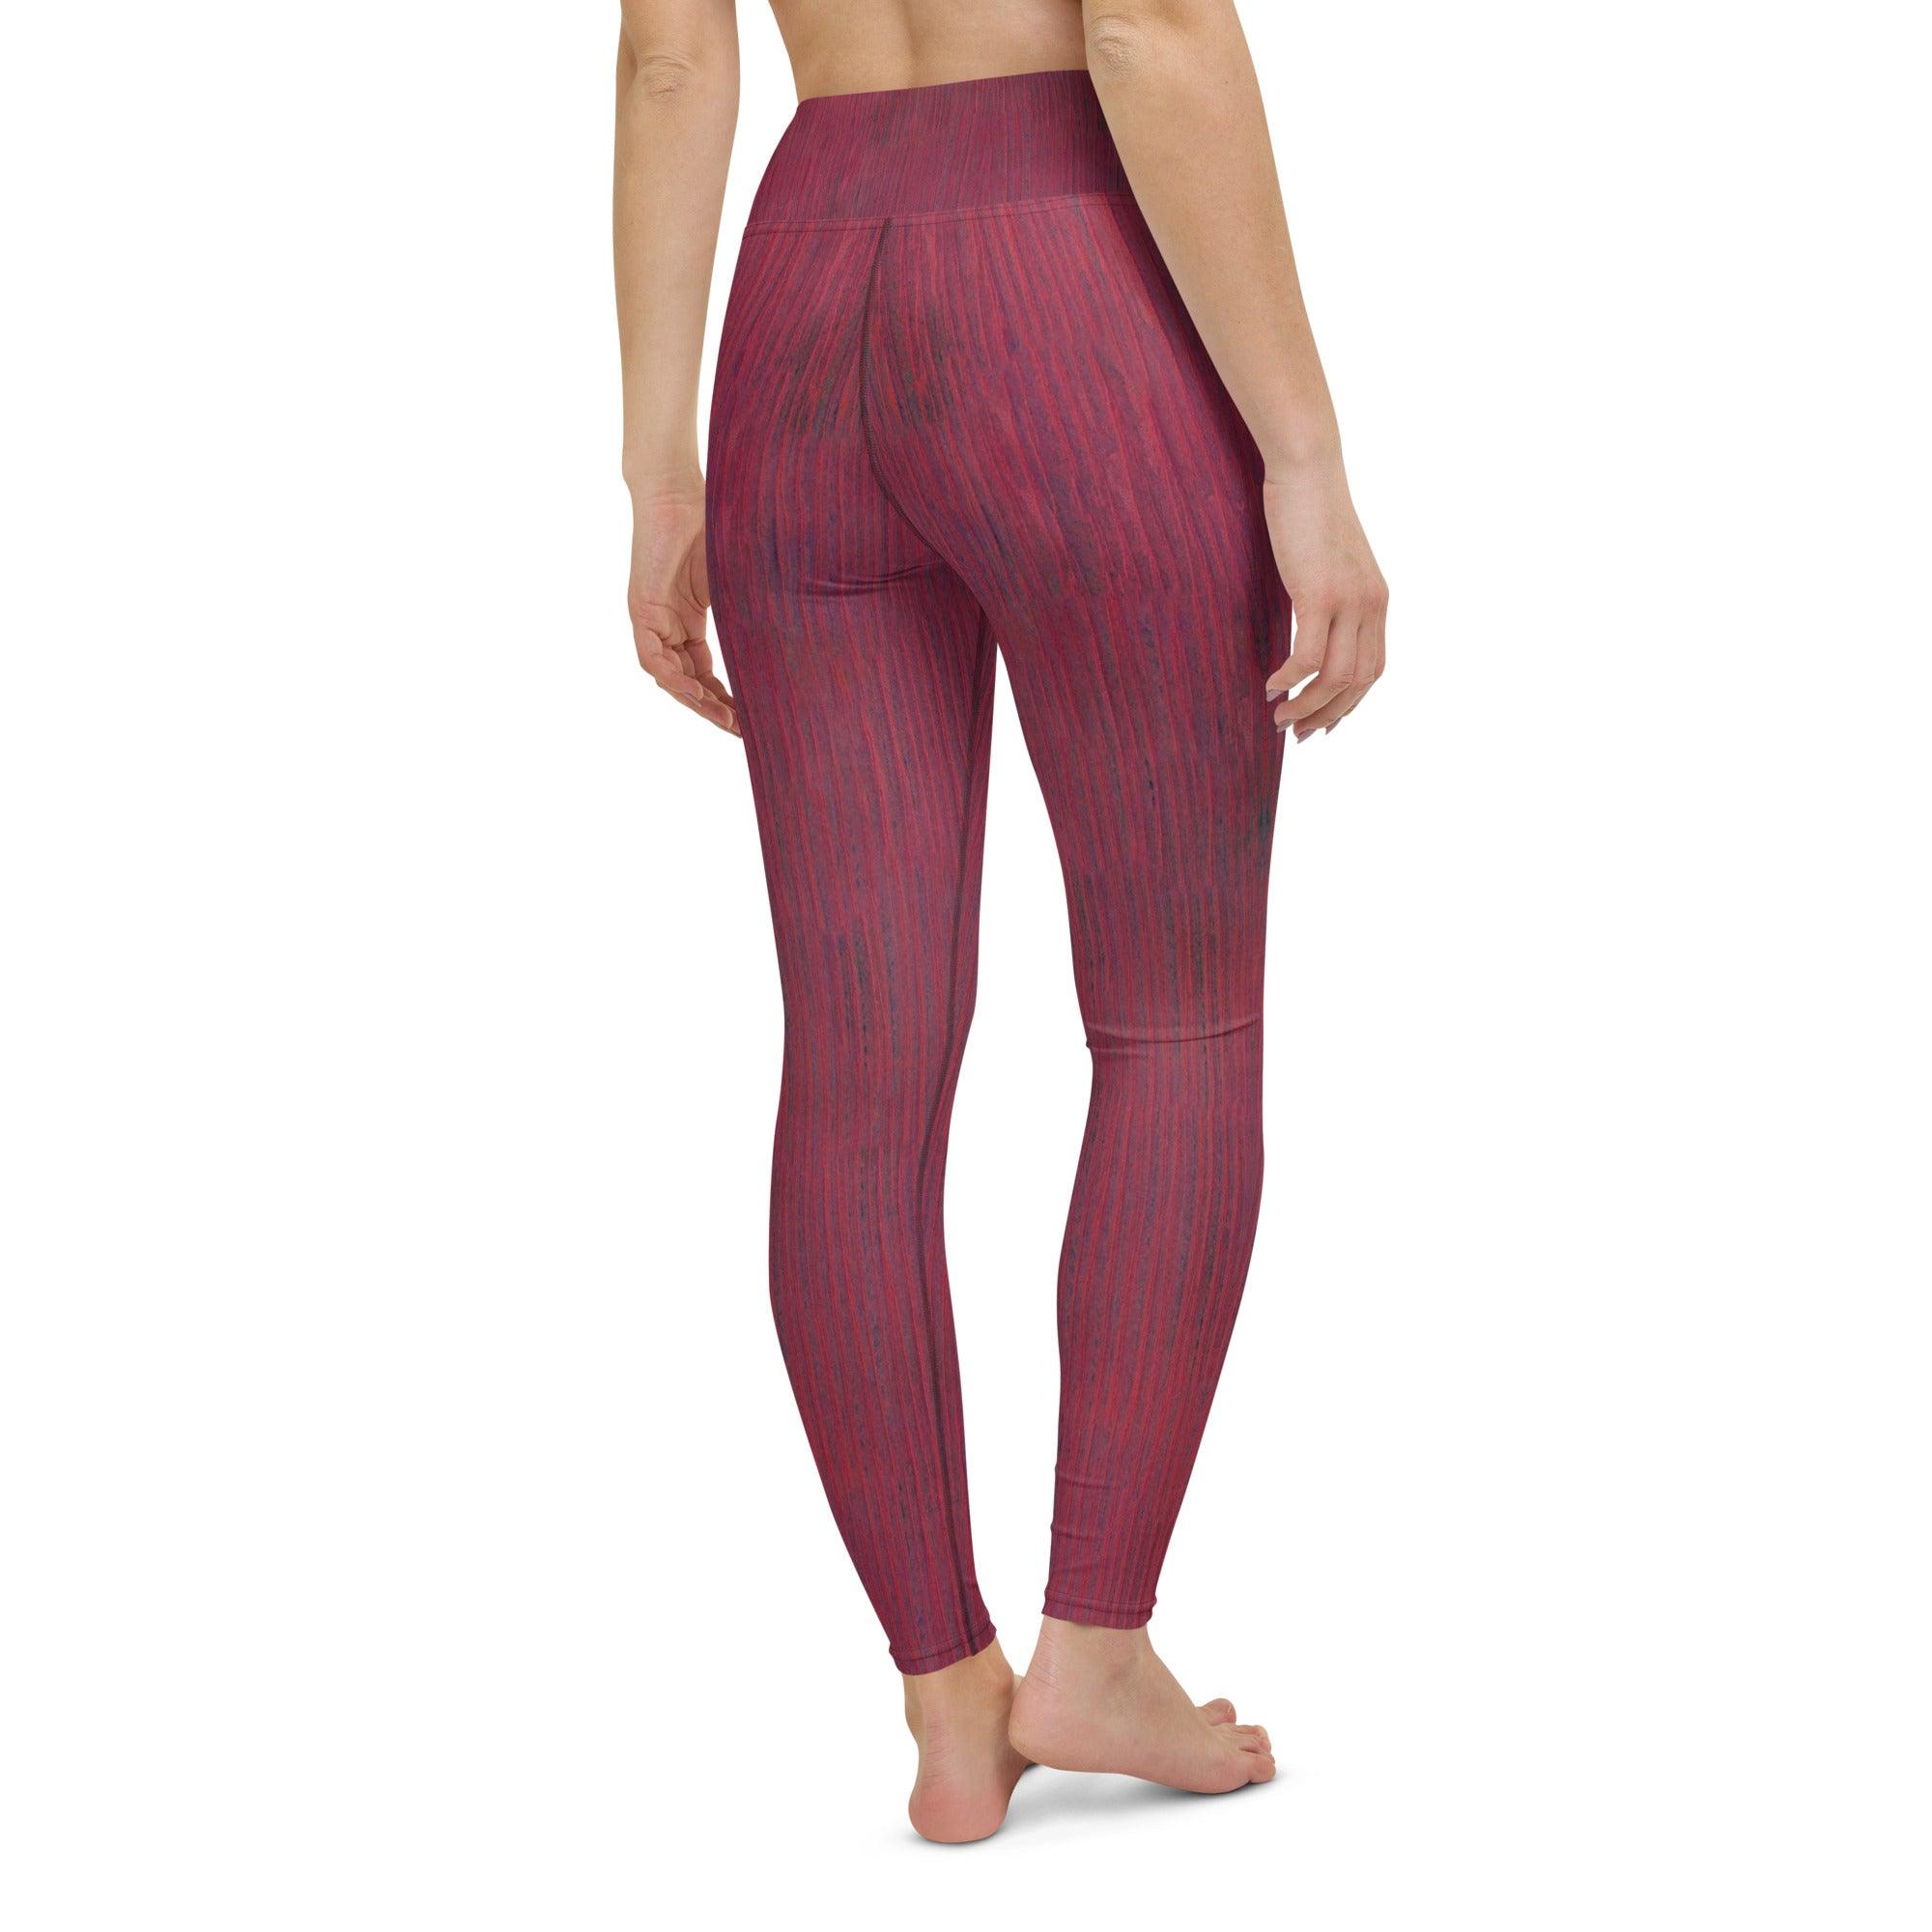 Fashionable Bloody Monday print on yoga leggings.